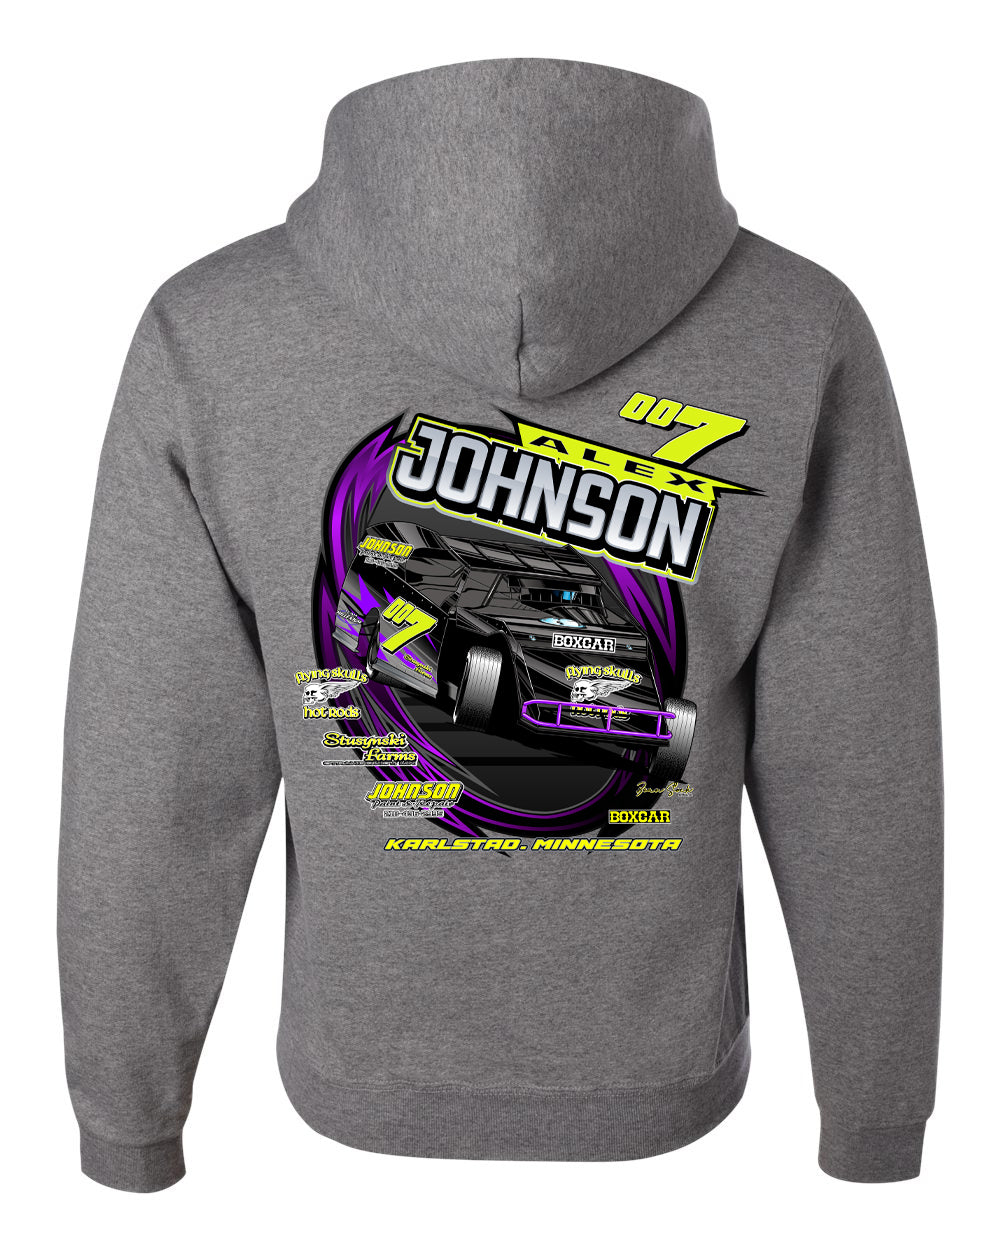 Alex Johnson Racing Hooded Sweatshirt Oxford